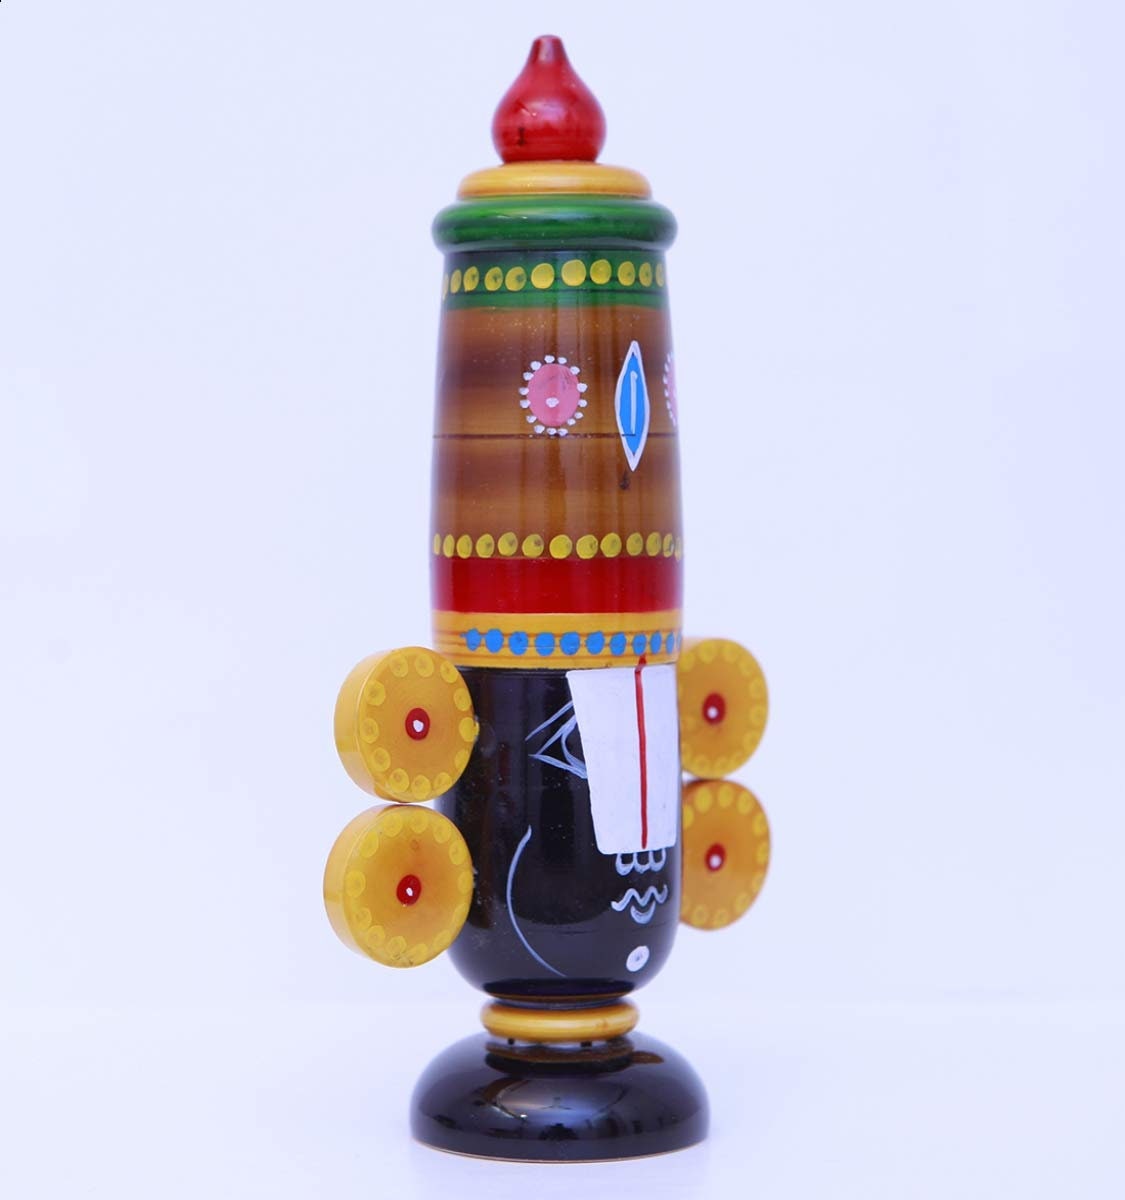 Handmade Colorful Lord Balaji Sculpture, House-warming Gift